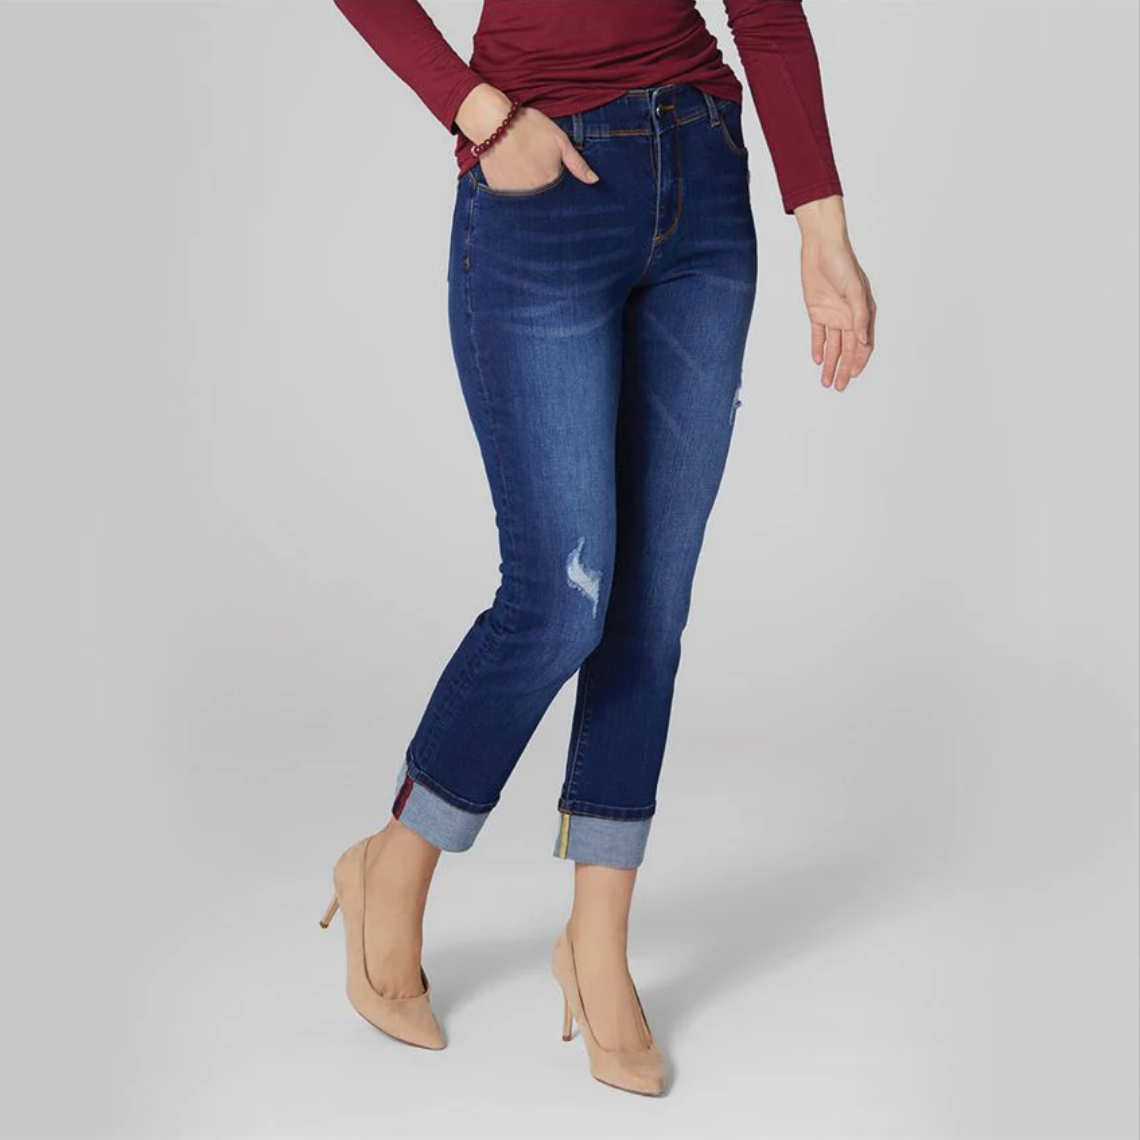 Cuffed Jeans Capris - Buy Cuffed Jeans Capris online in India